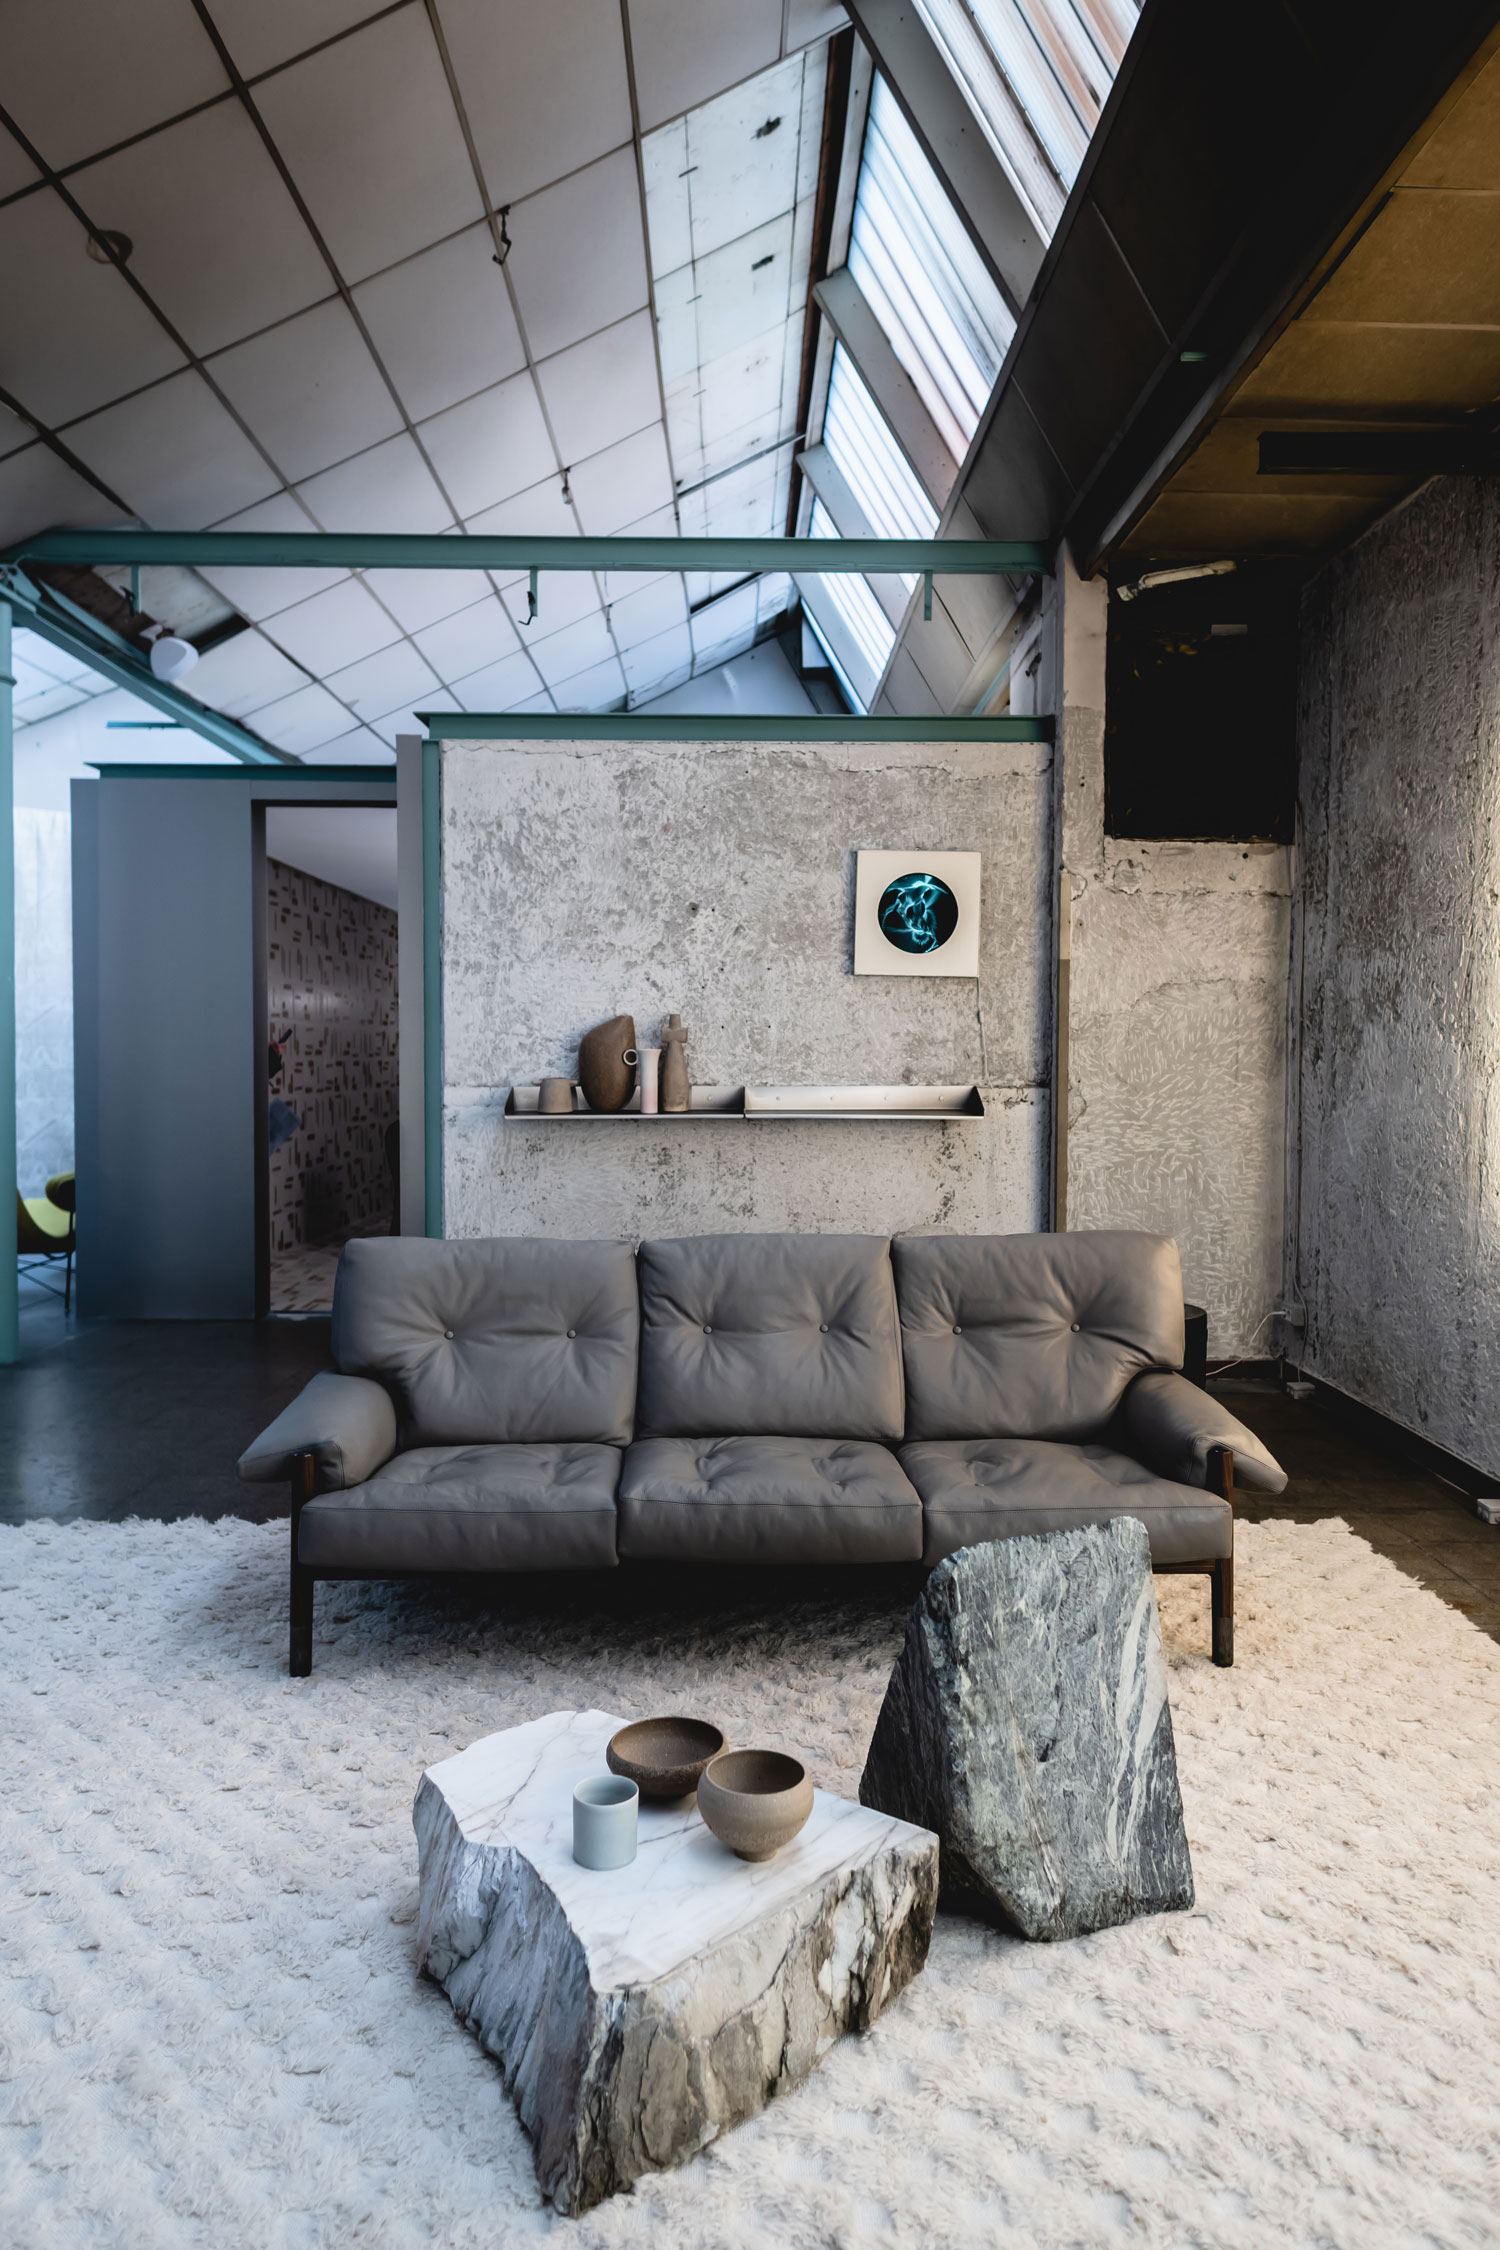 Interior Design Trends For 2020 From Milan Design Week 2019